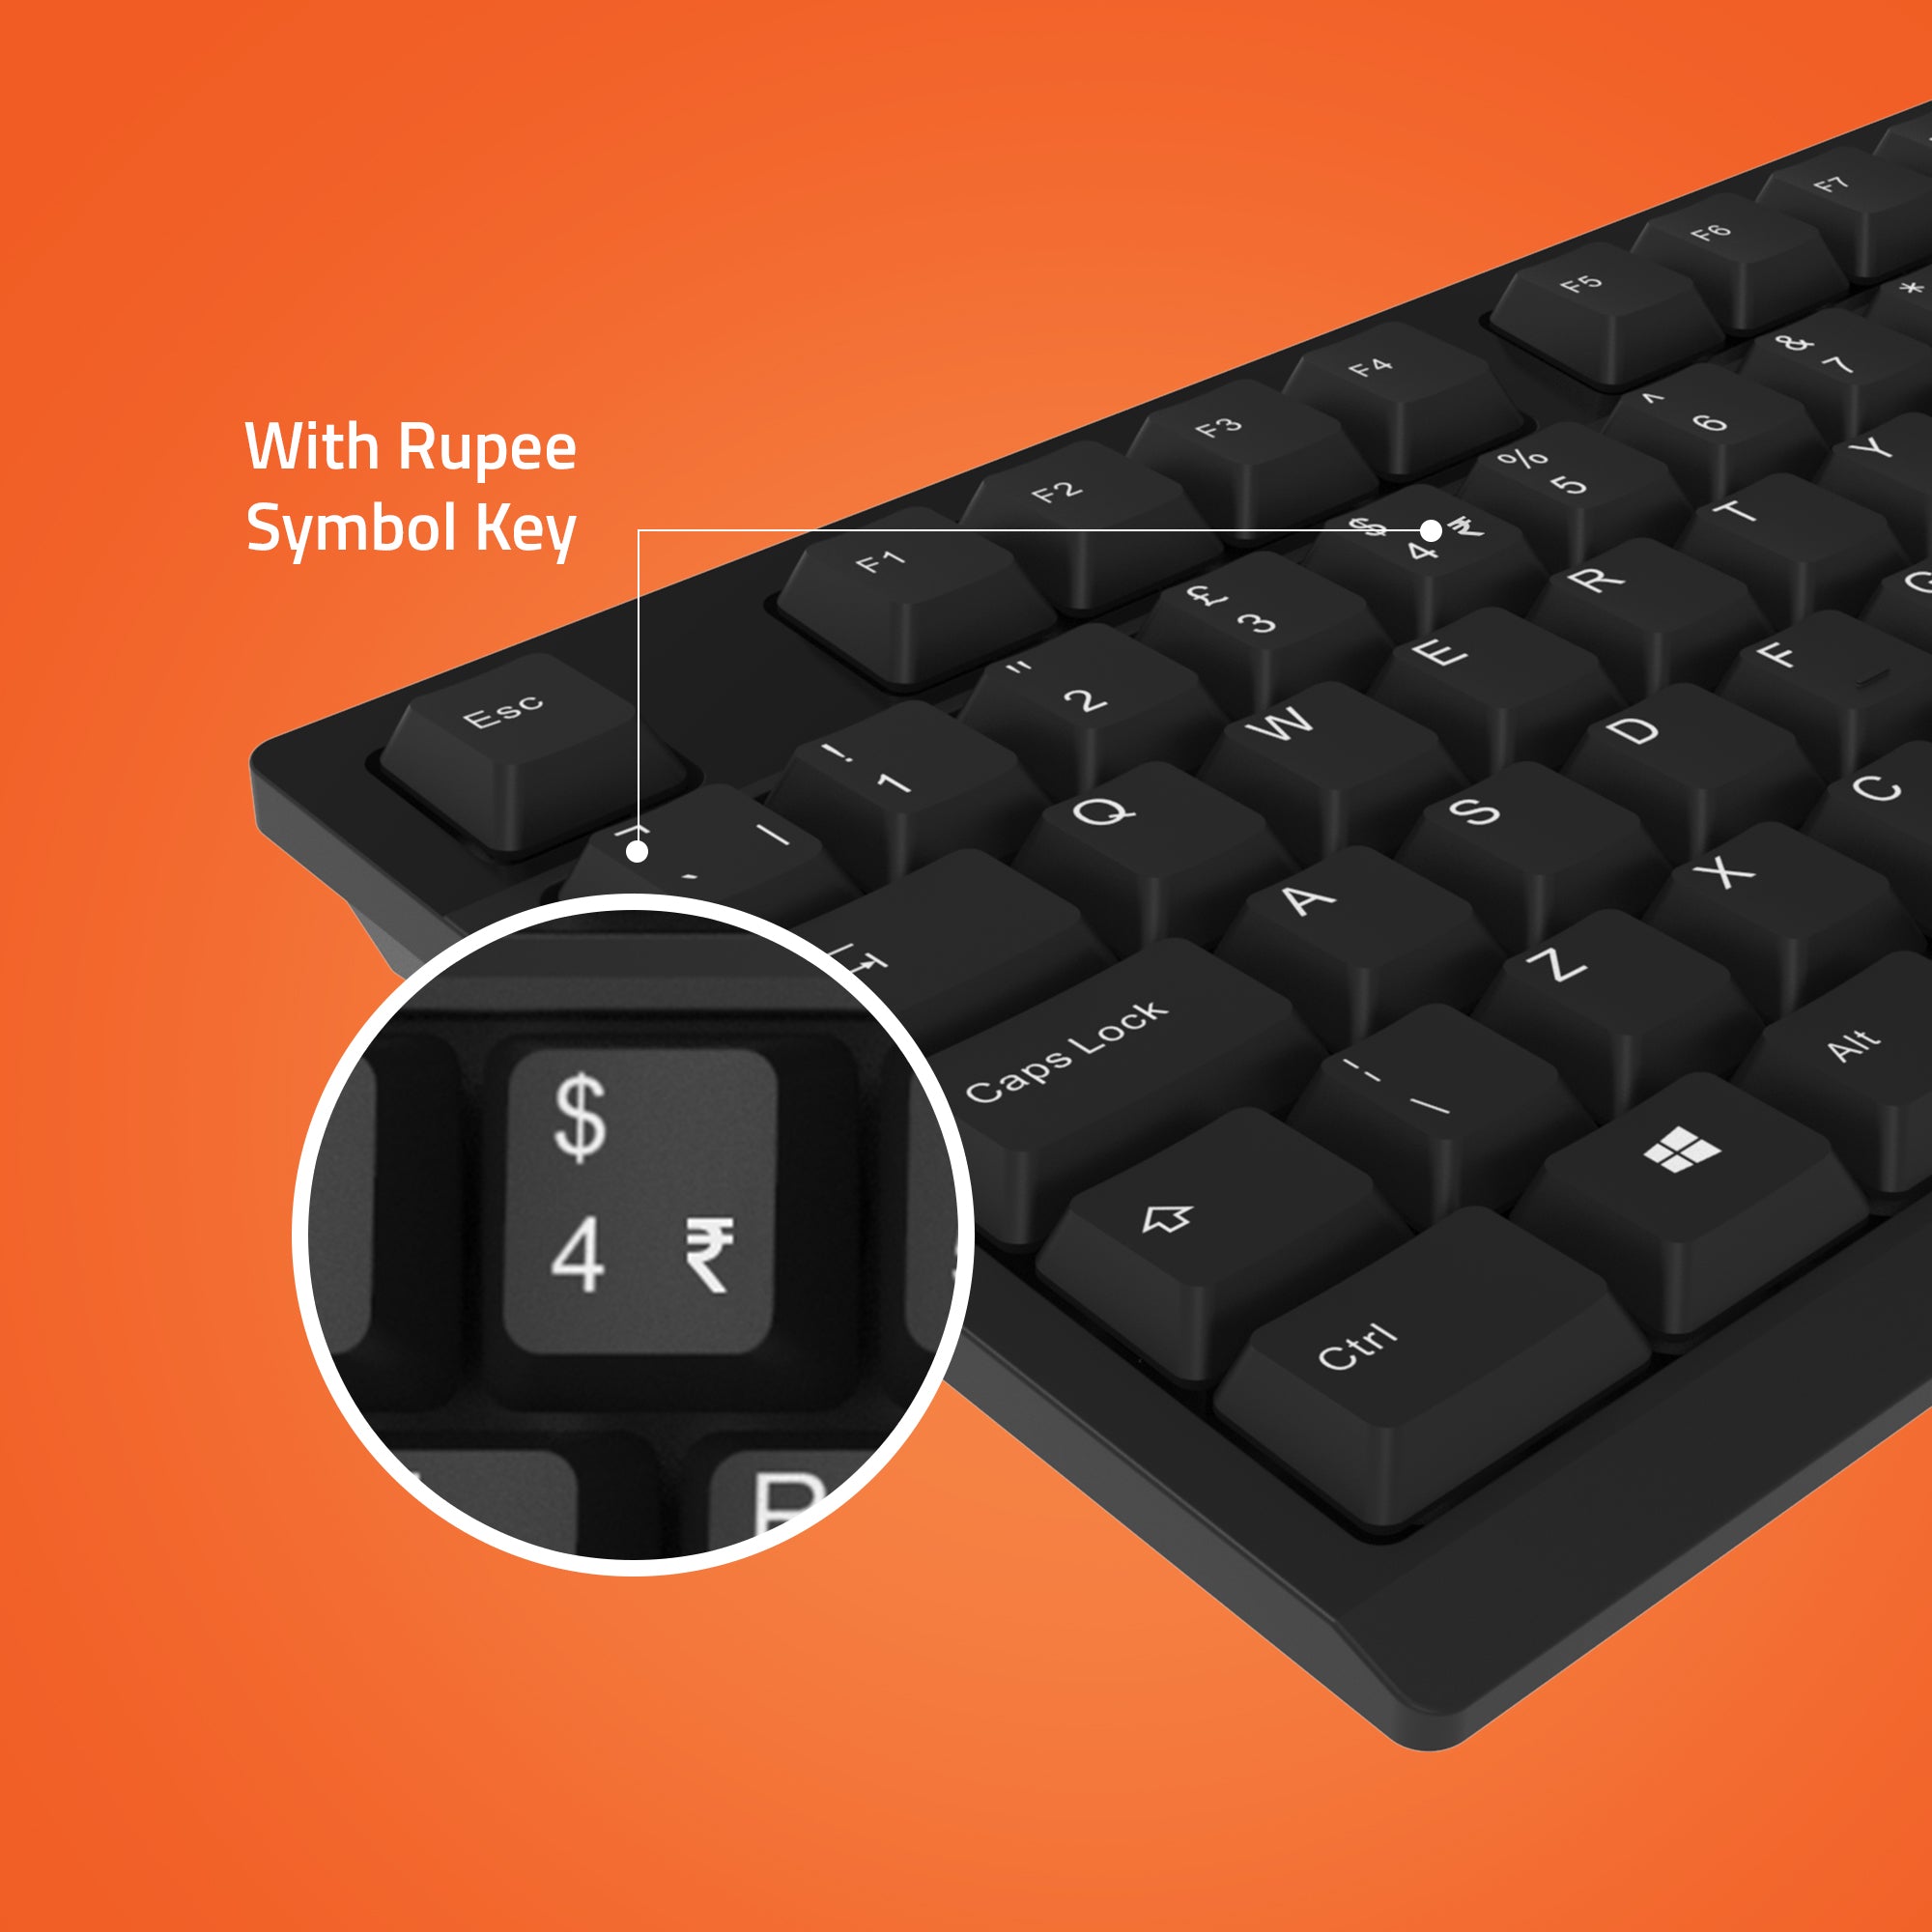 K10 Artis USB keyboard | Wired keyboard